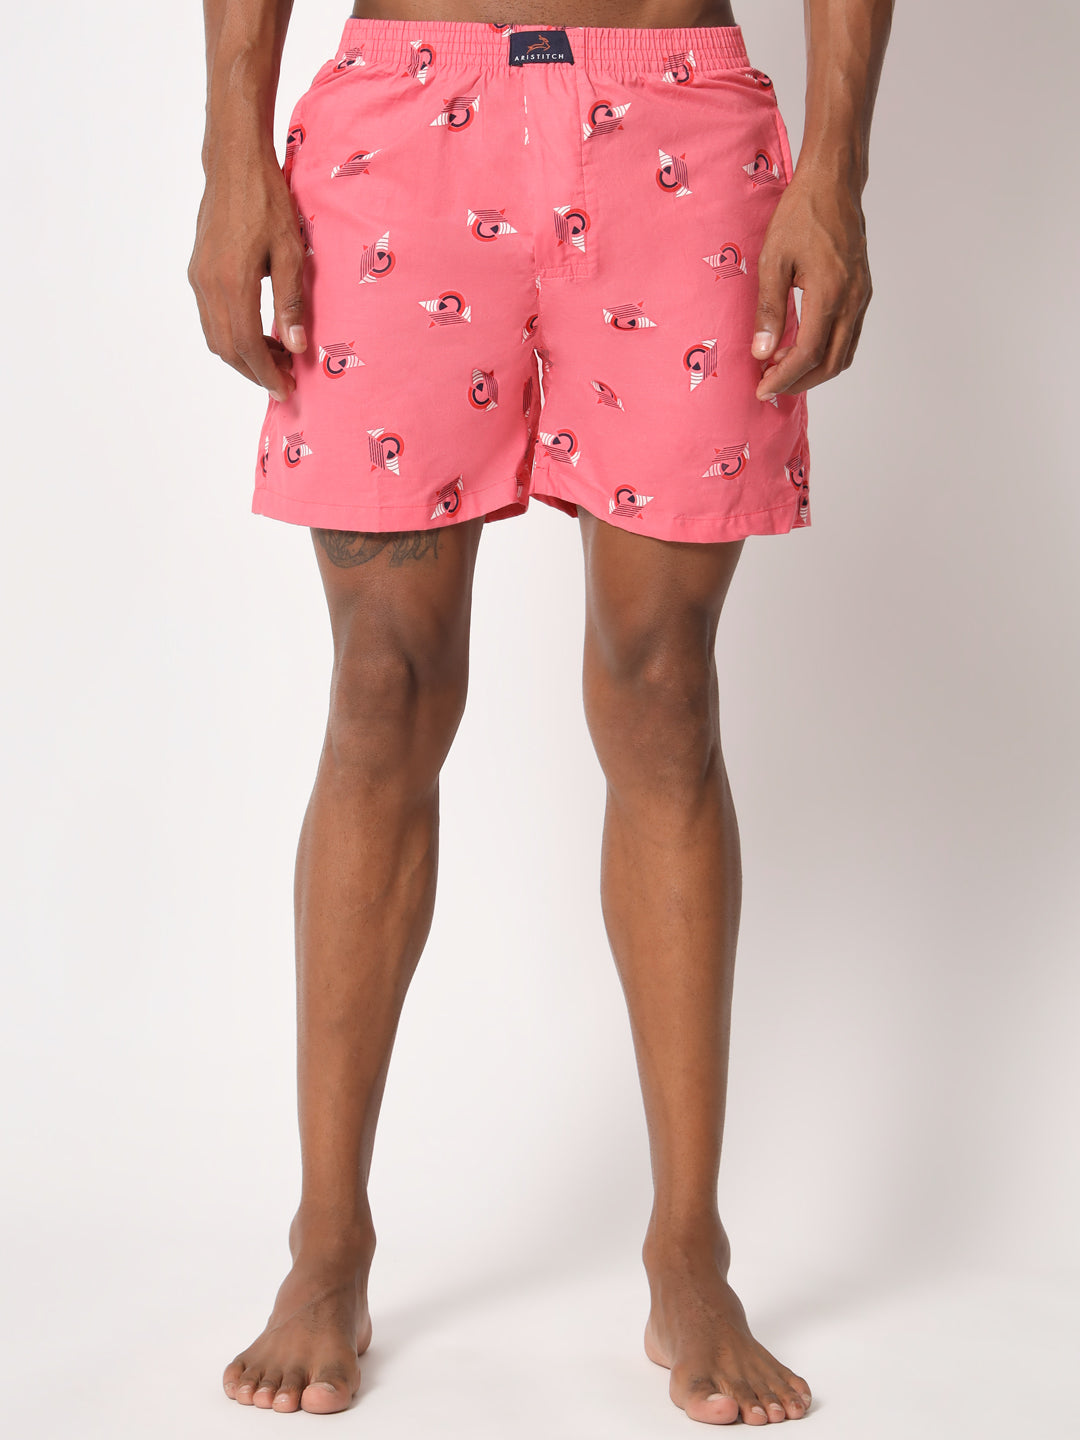 Pink Printed Boxer for Men Soft feel